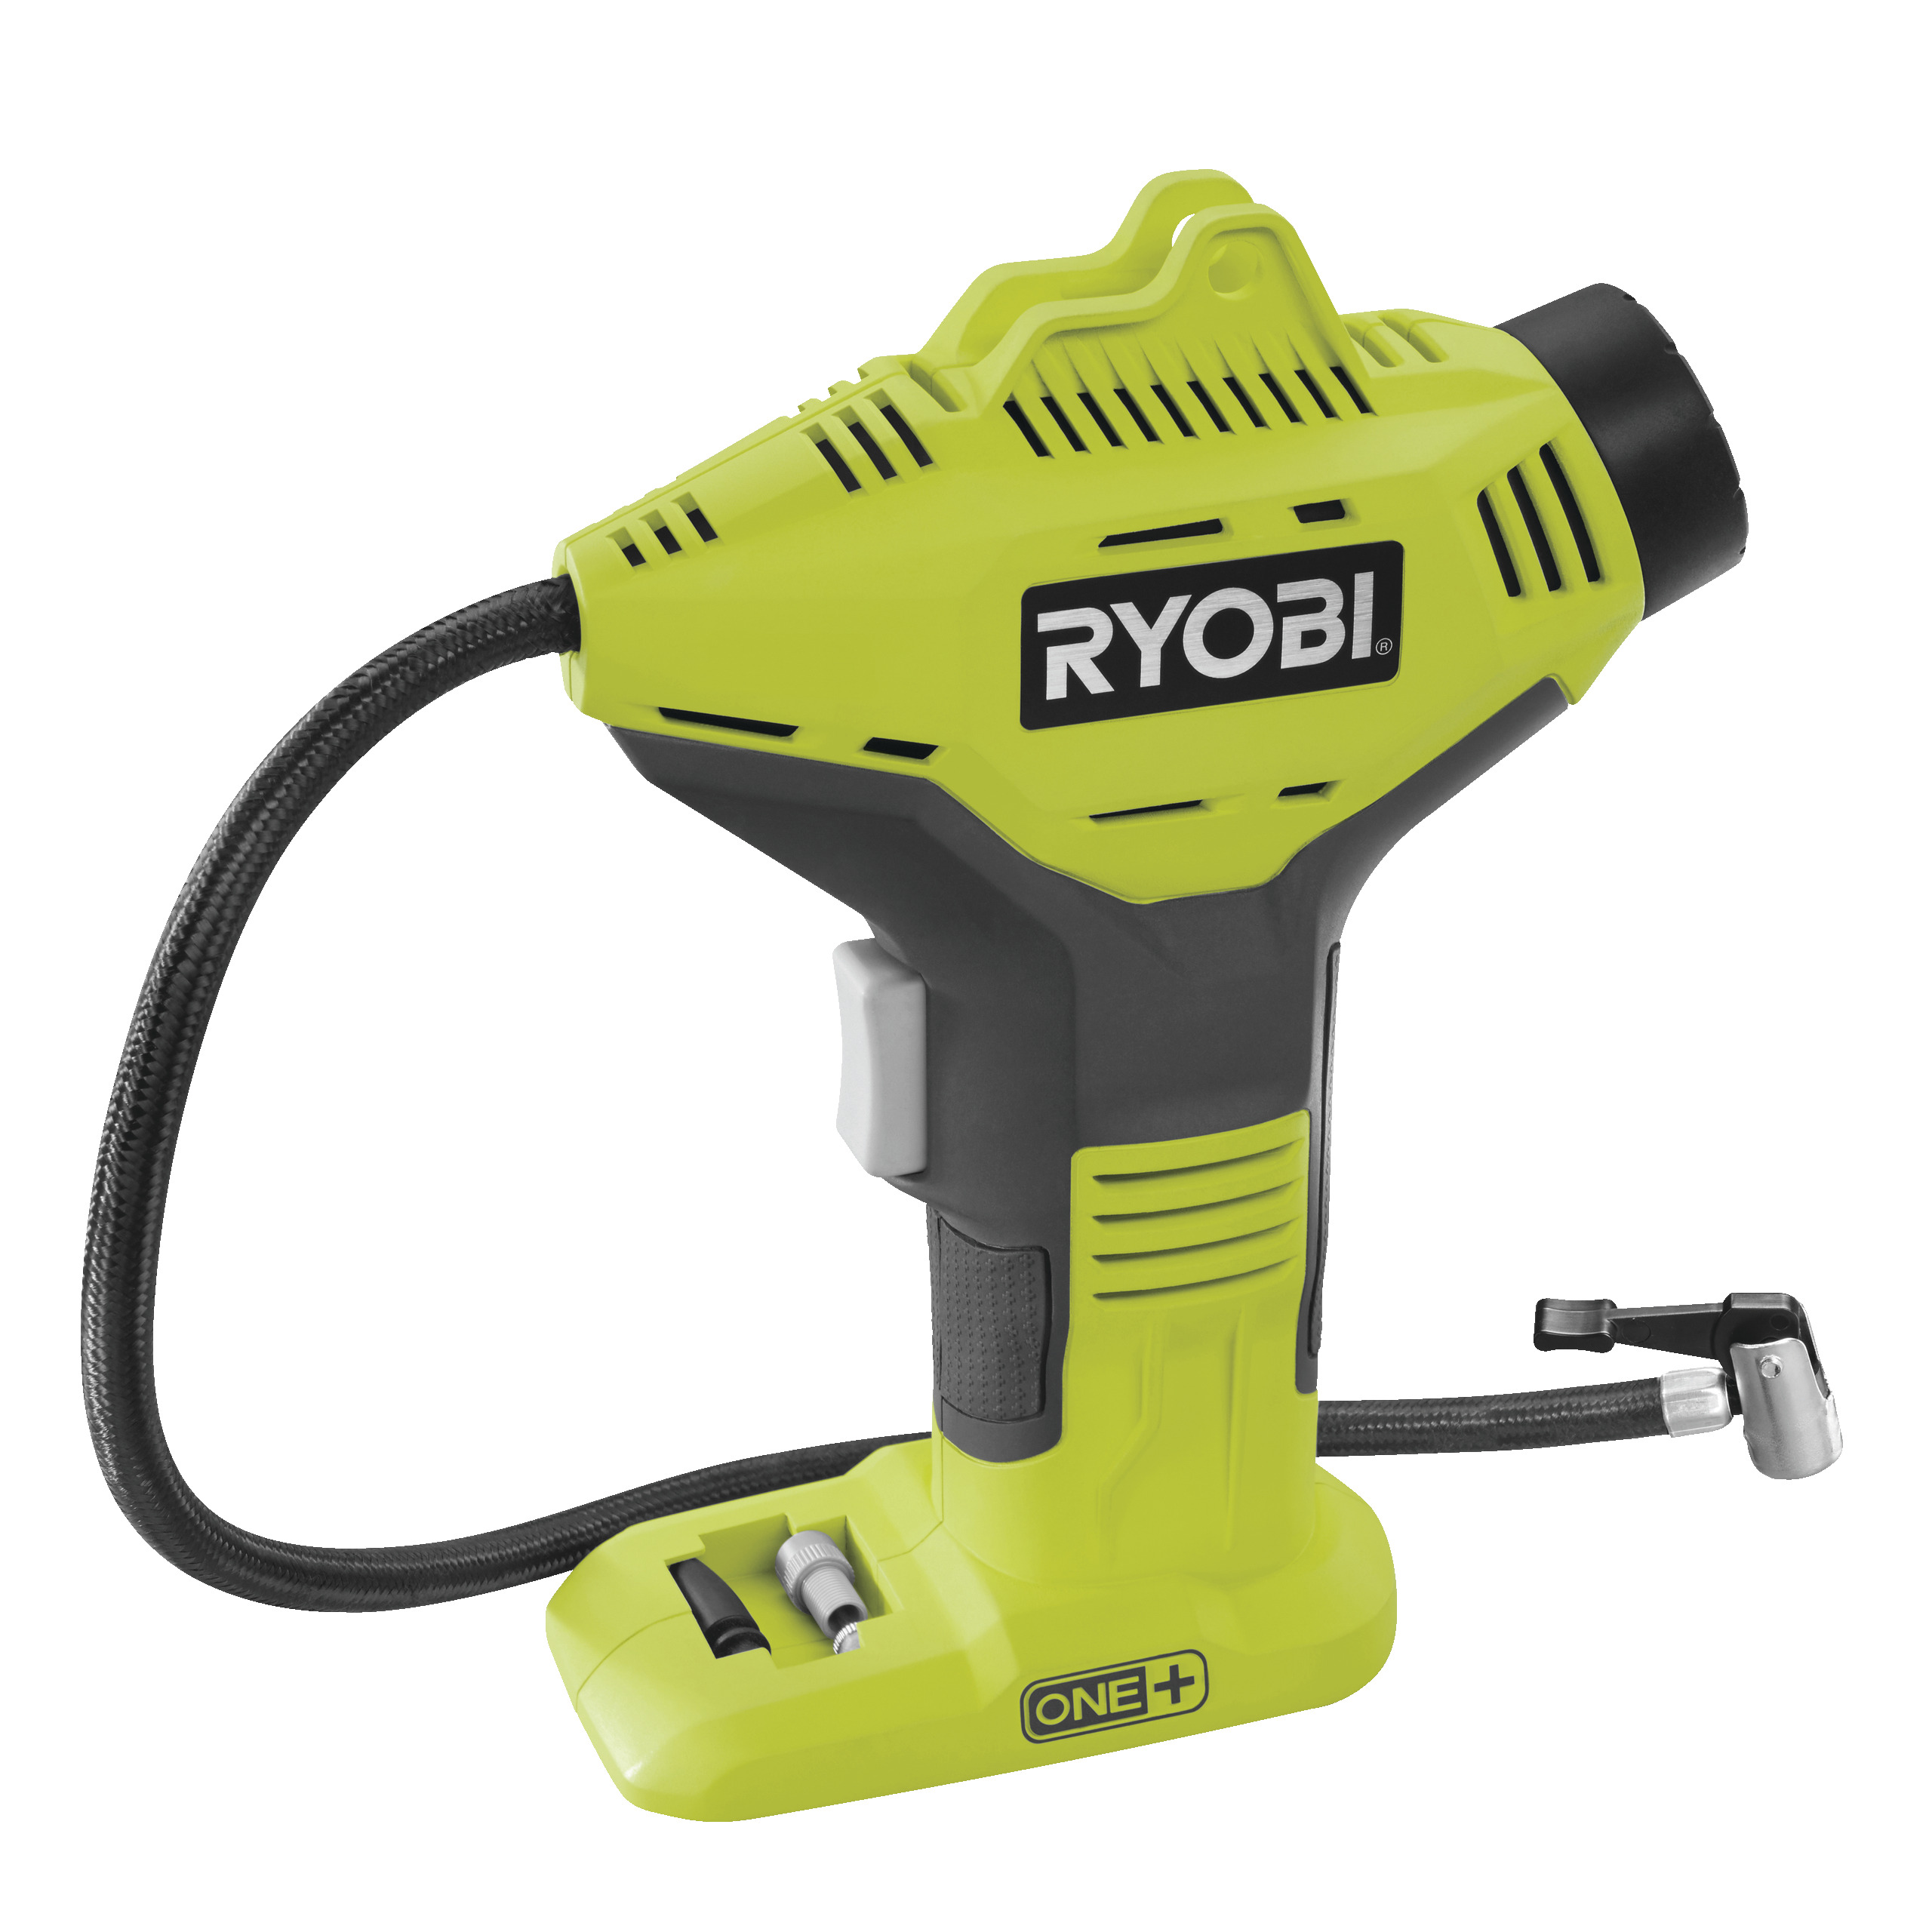 Ryobi France - Le gonfleur-compresseur R18MI 18V ONE+™ permet de